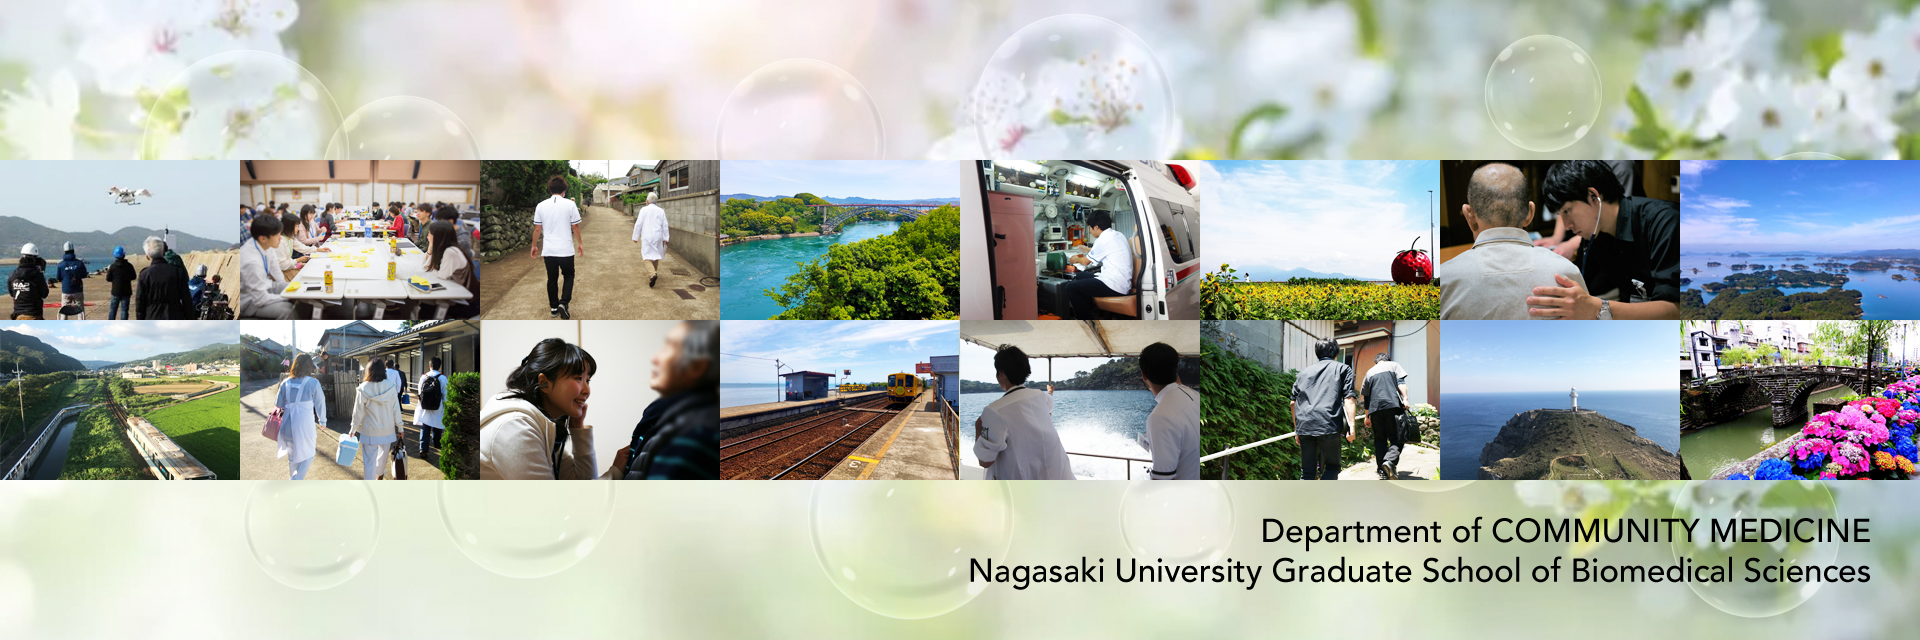 Department of Community Medicine, Nagasaki University Graduate School of Biomedical Sciences